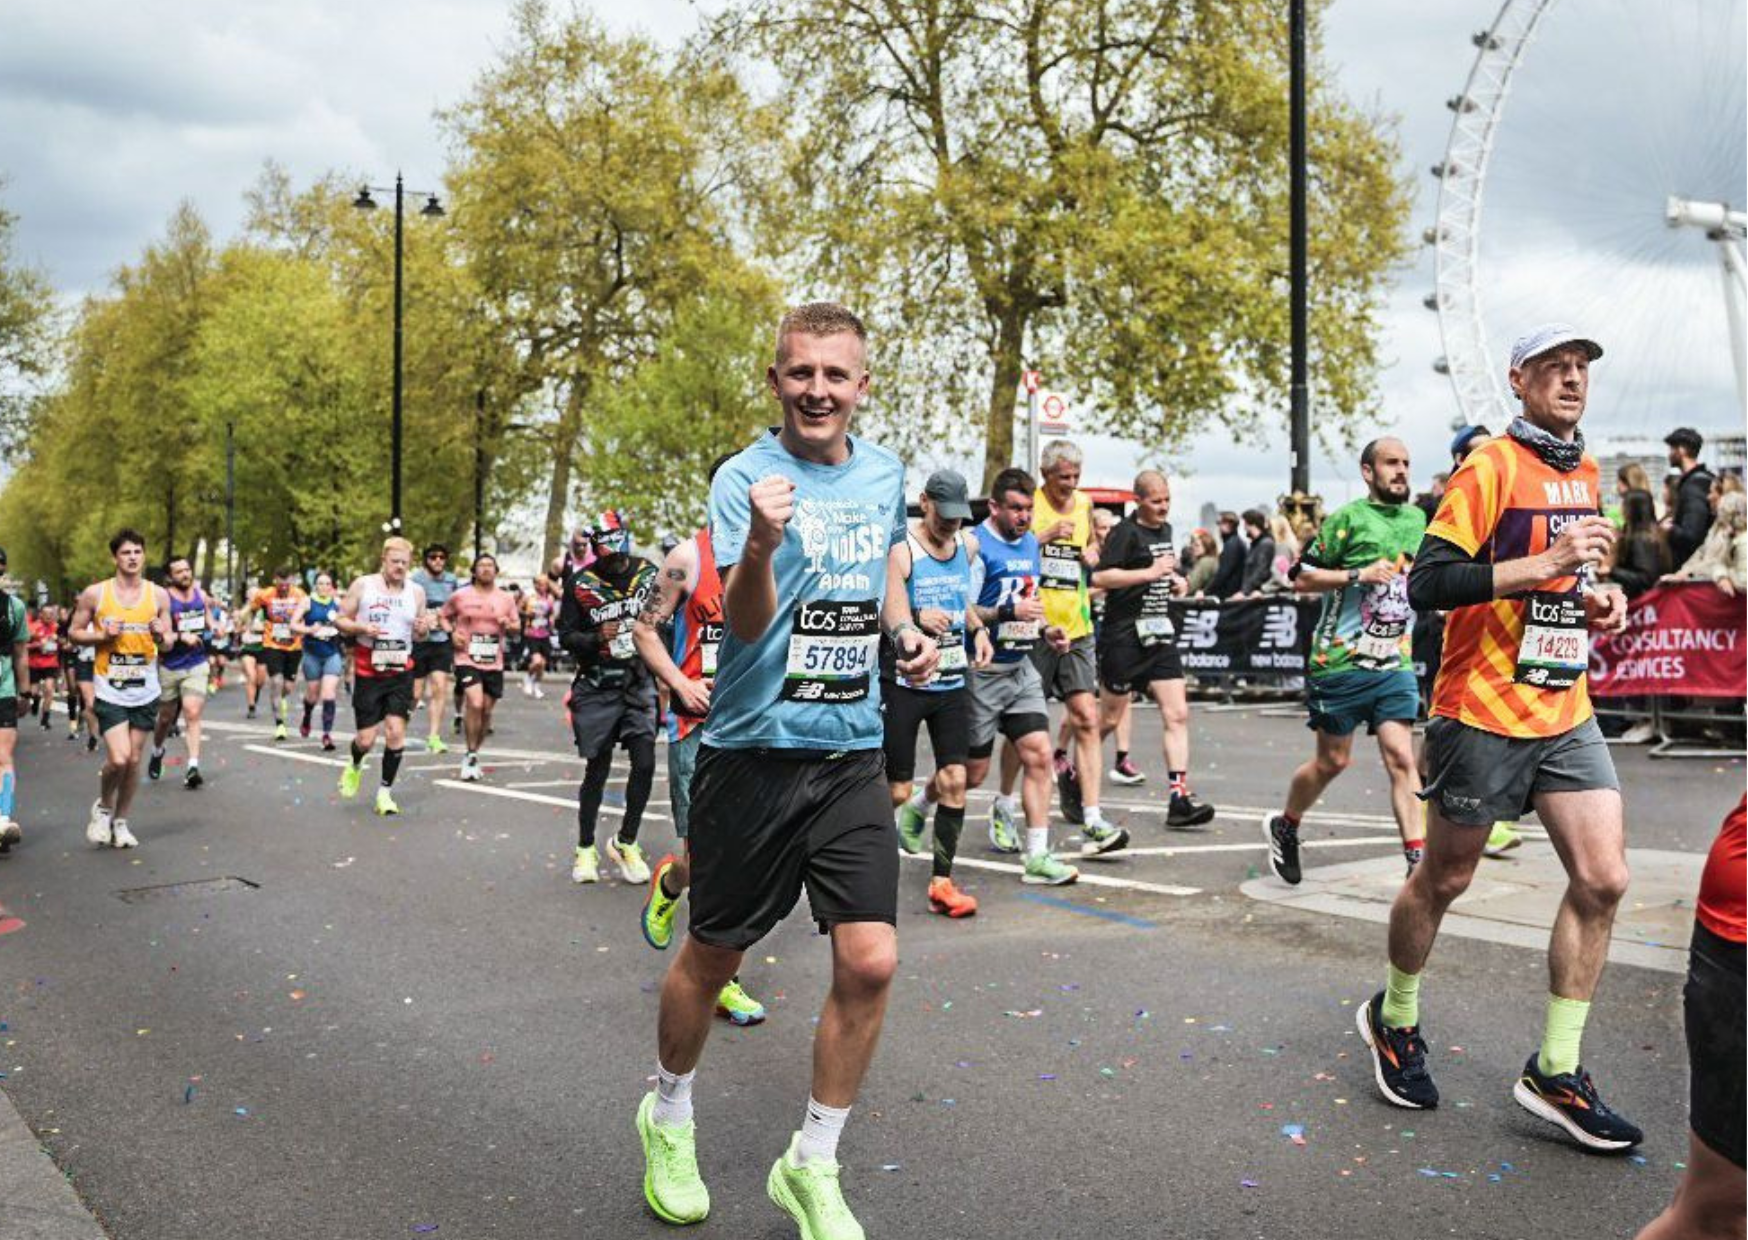 Run the London Marathon for Global's Make Some Noise